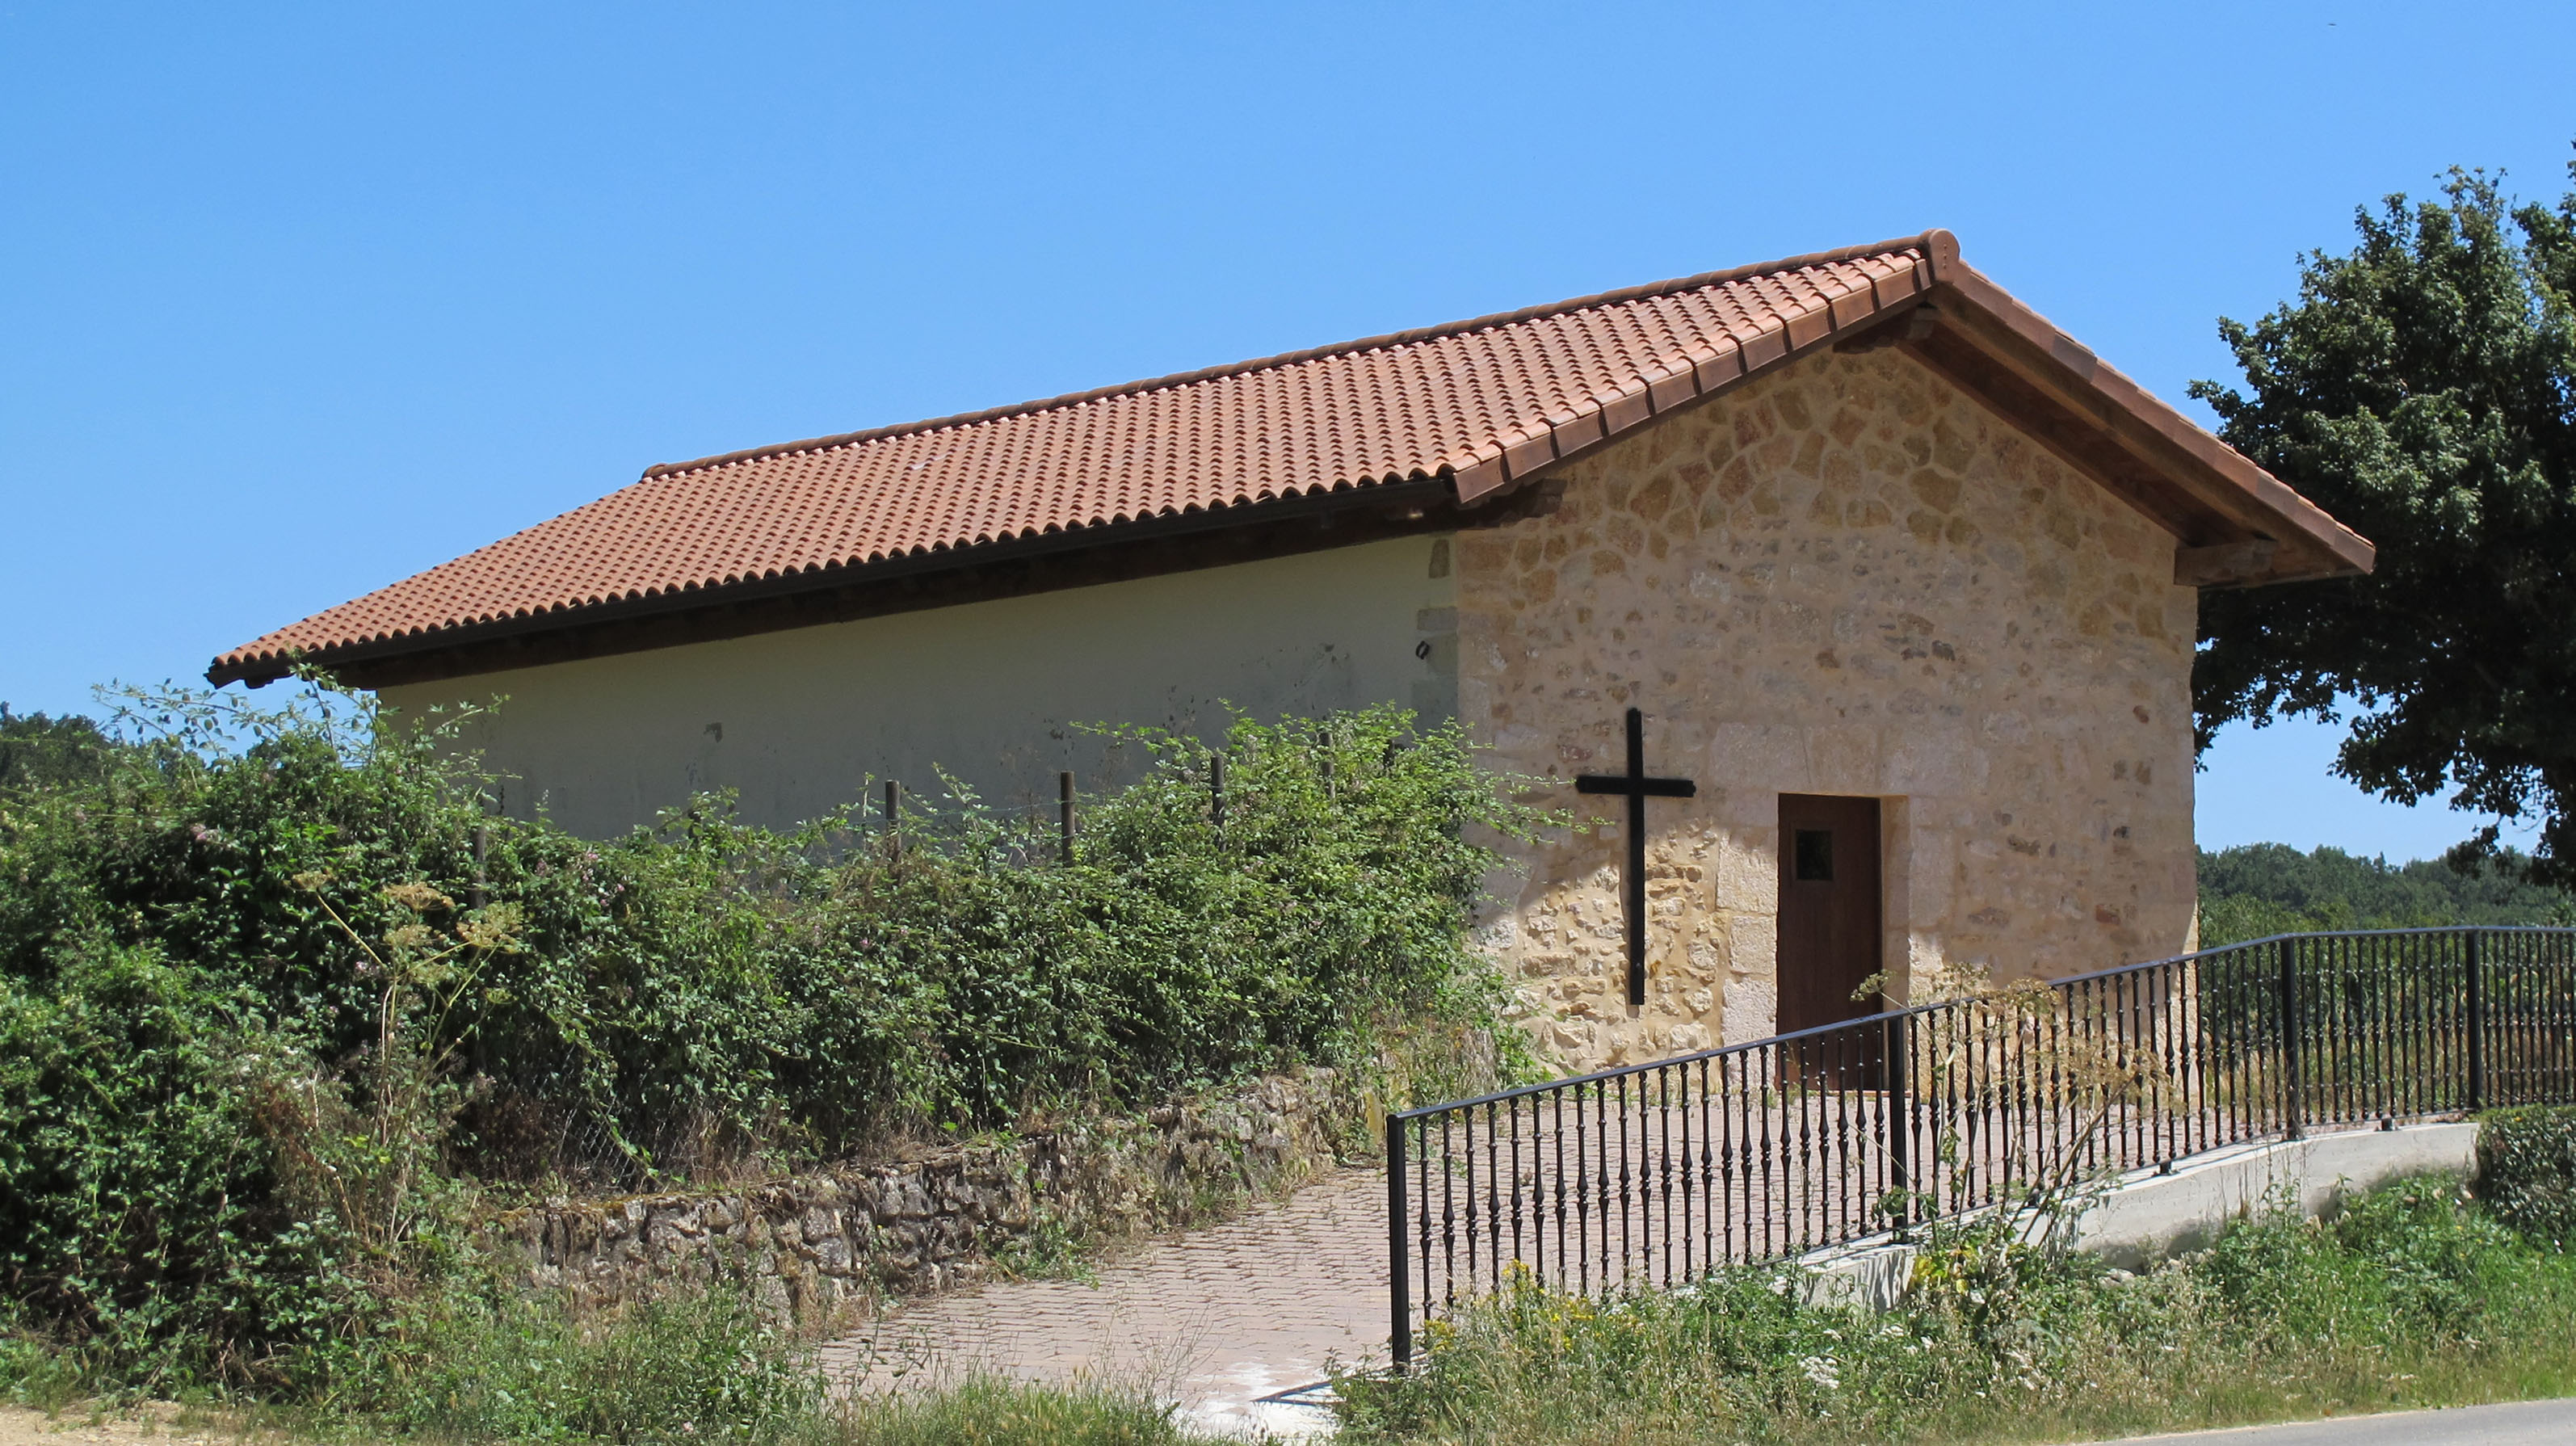 San Gervasio ermita, Sabando